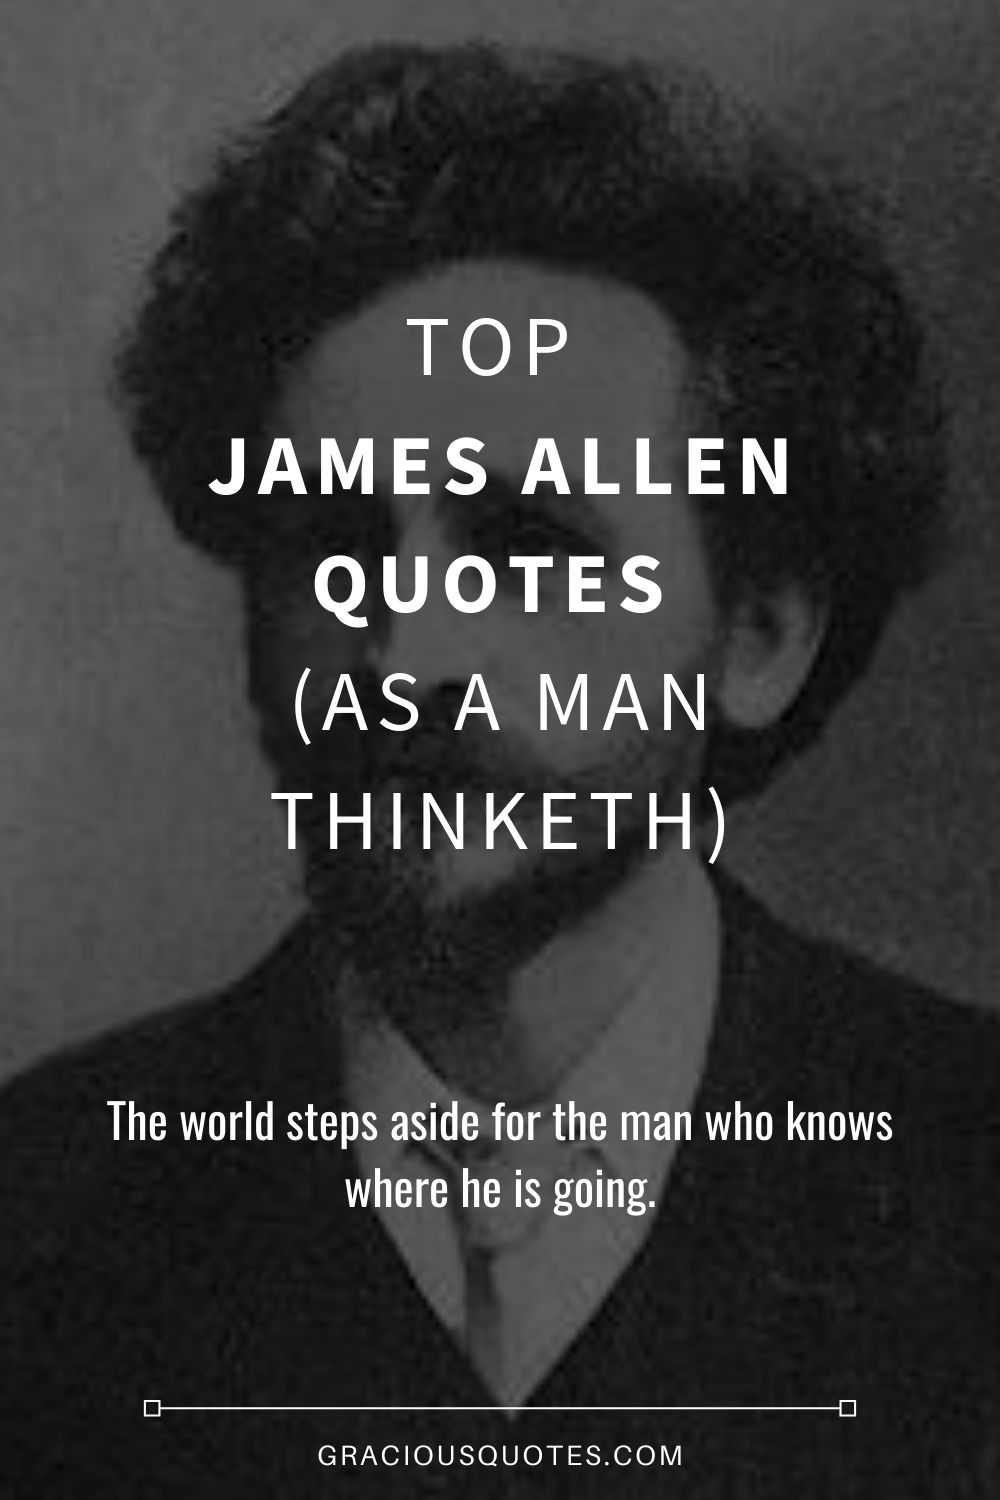 Top James Allen Quotes (AS A MAN THINKETH) - Gracious Quotes